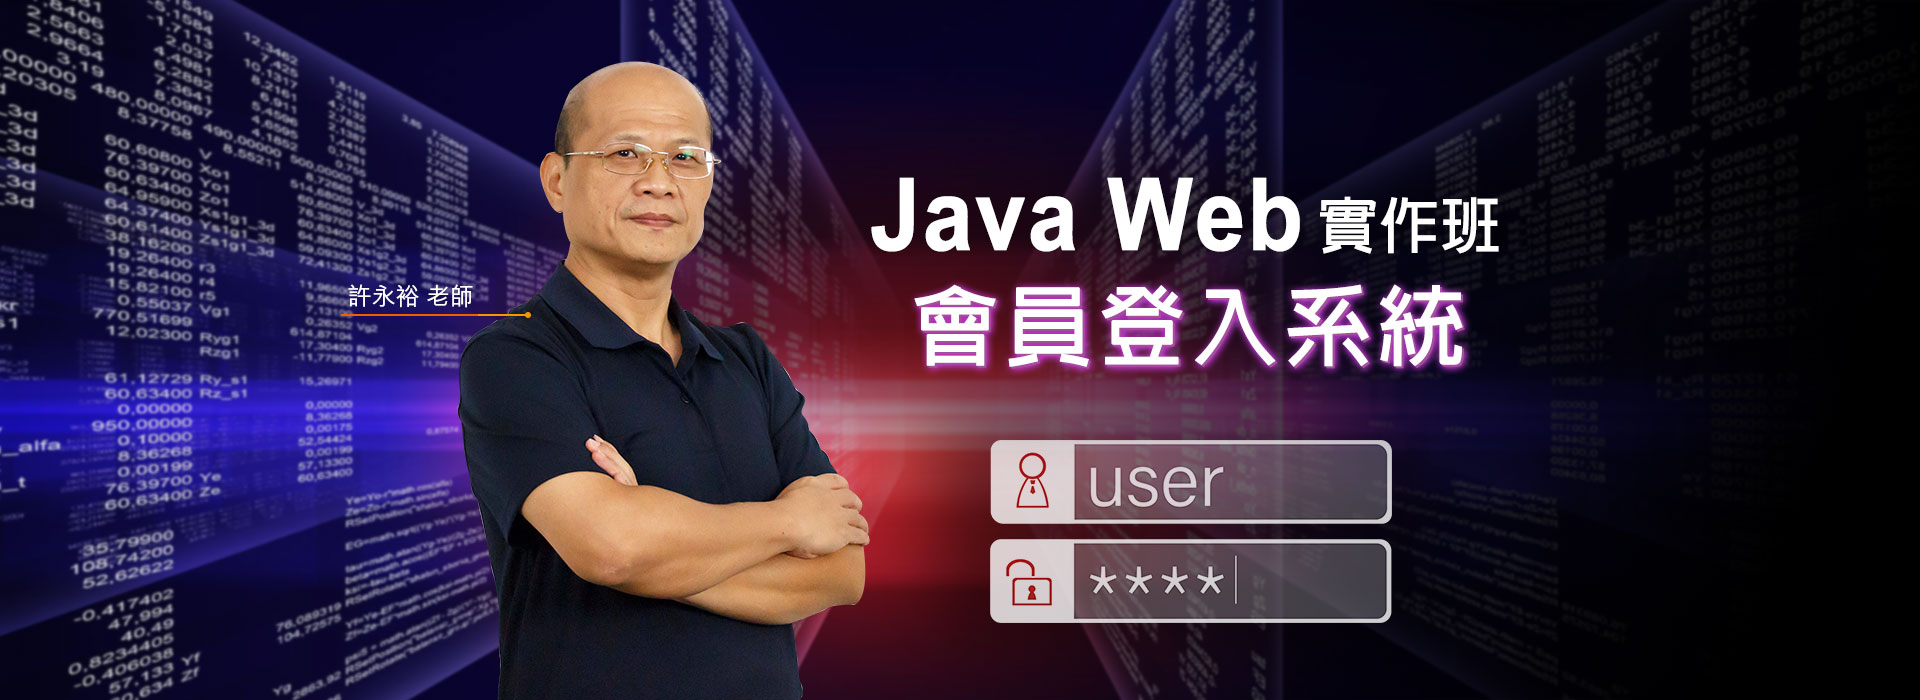 [JSP] Java Web 實作班 - 會員登入系統